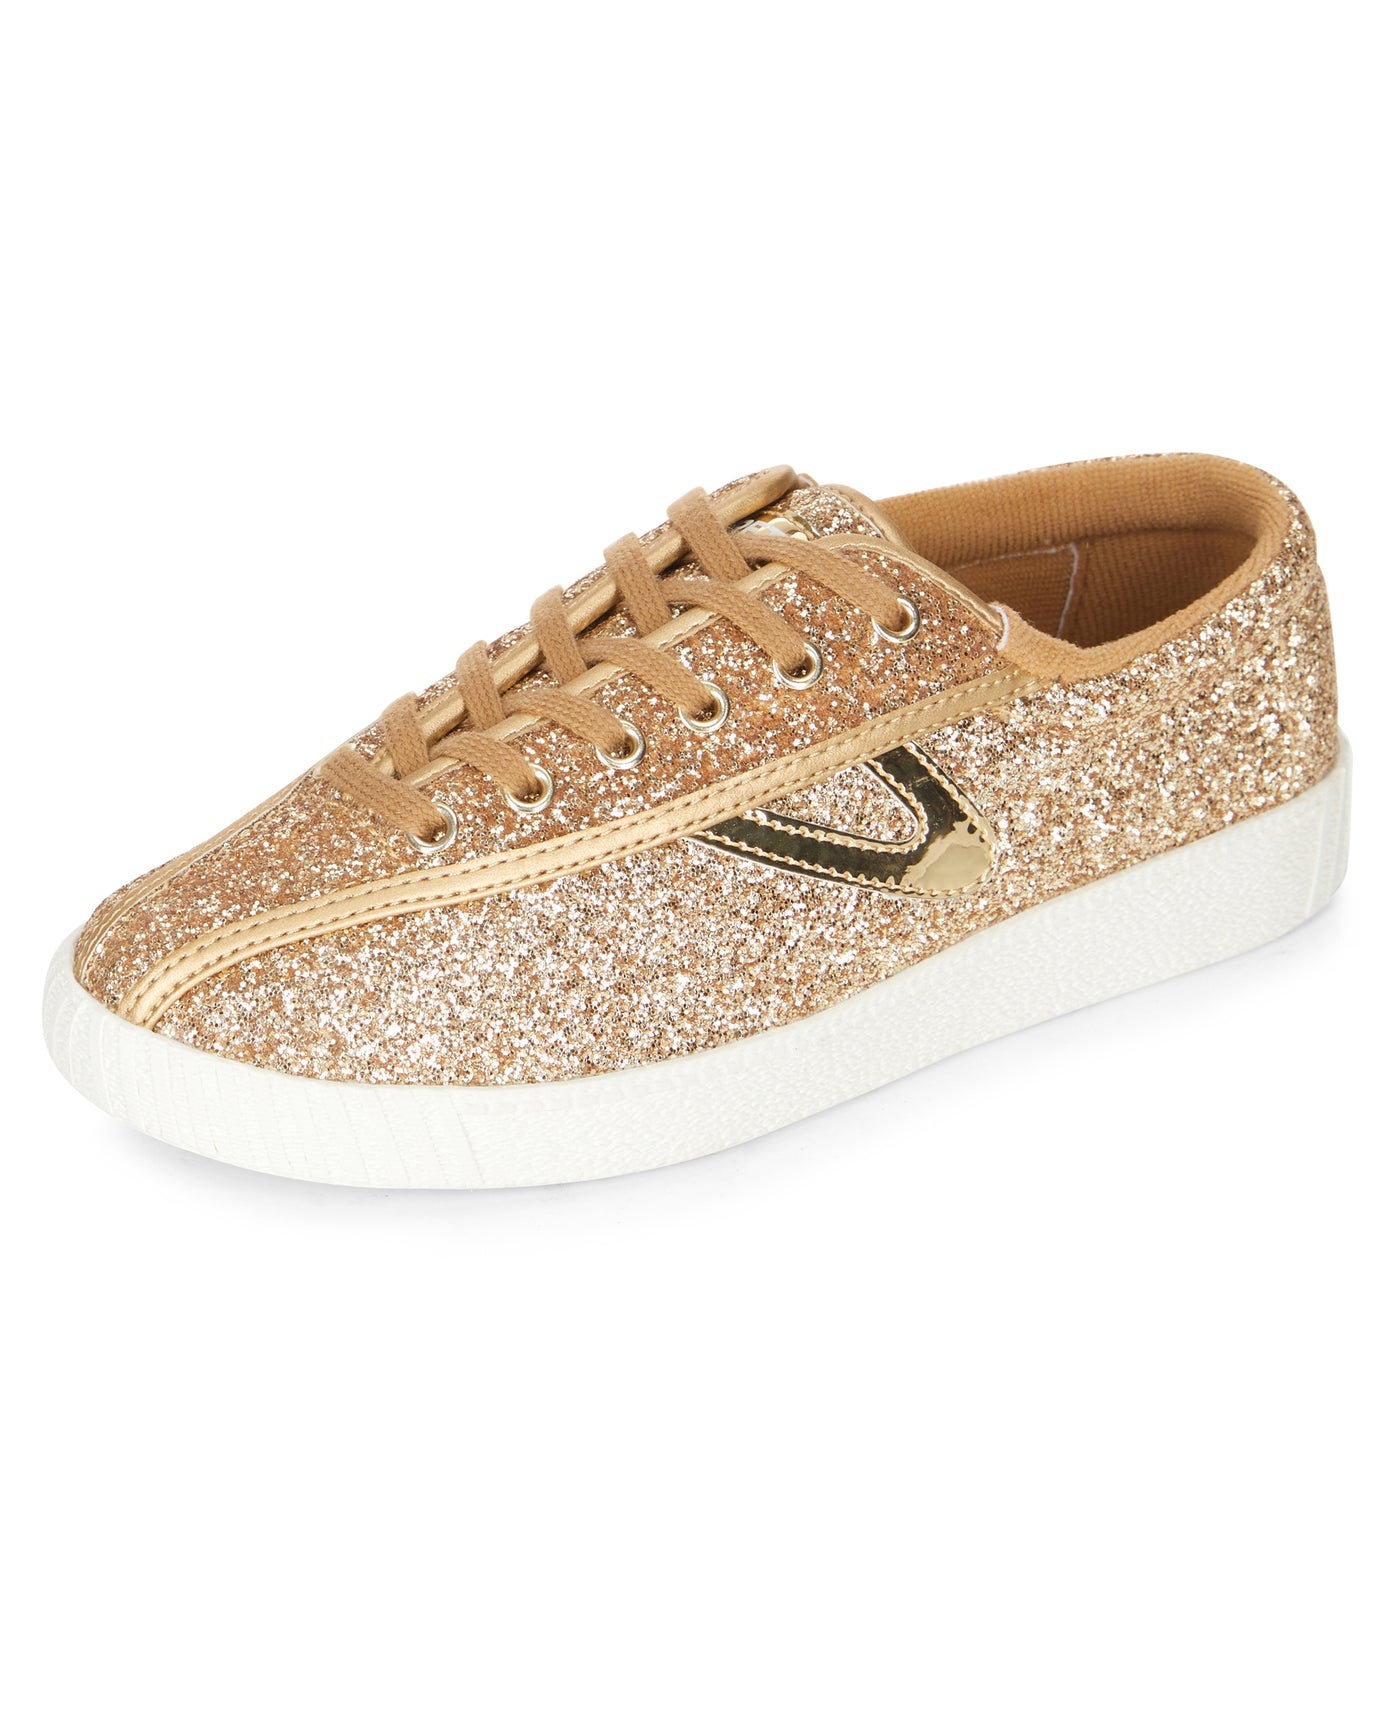 Tretorn Women's Sneakers Nylite Glitter Gold